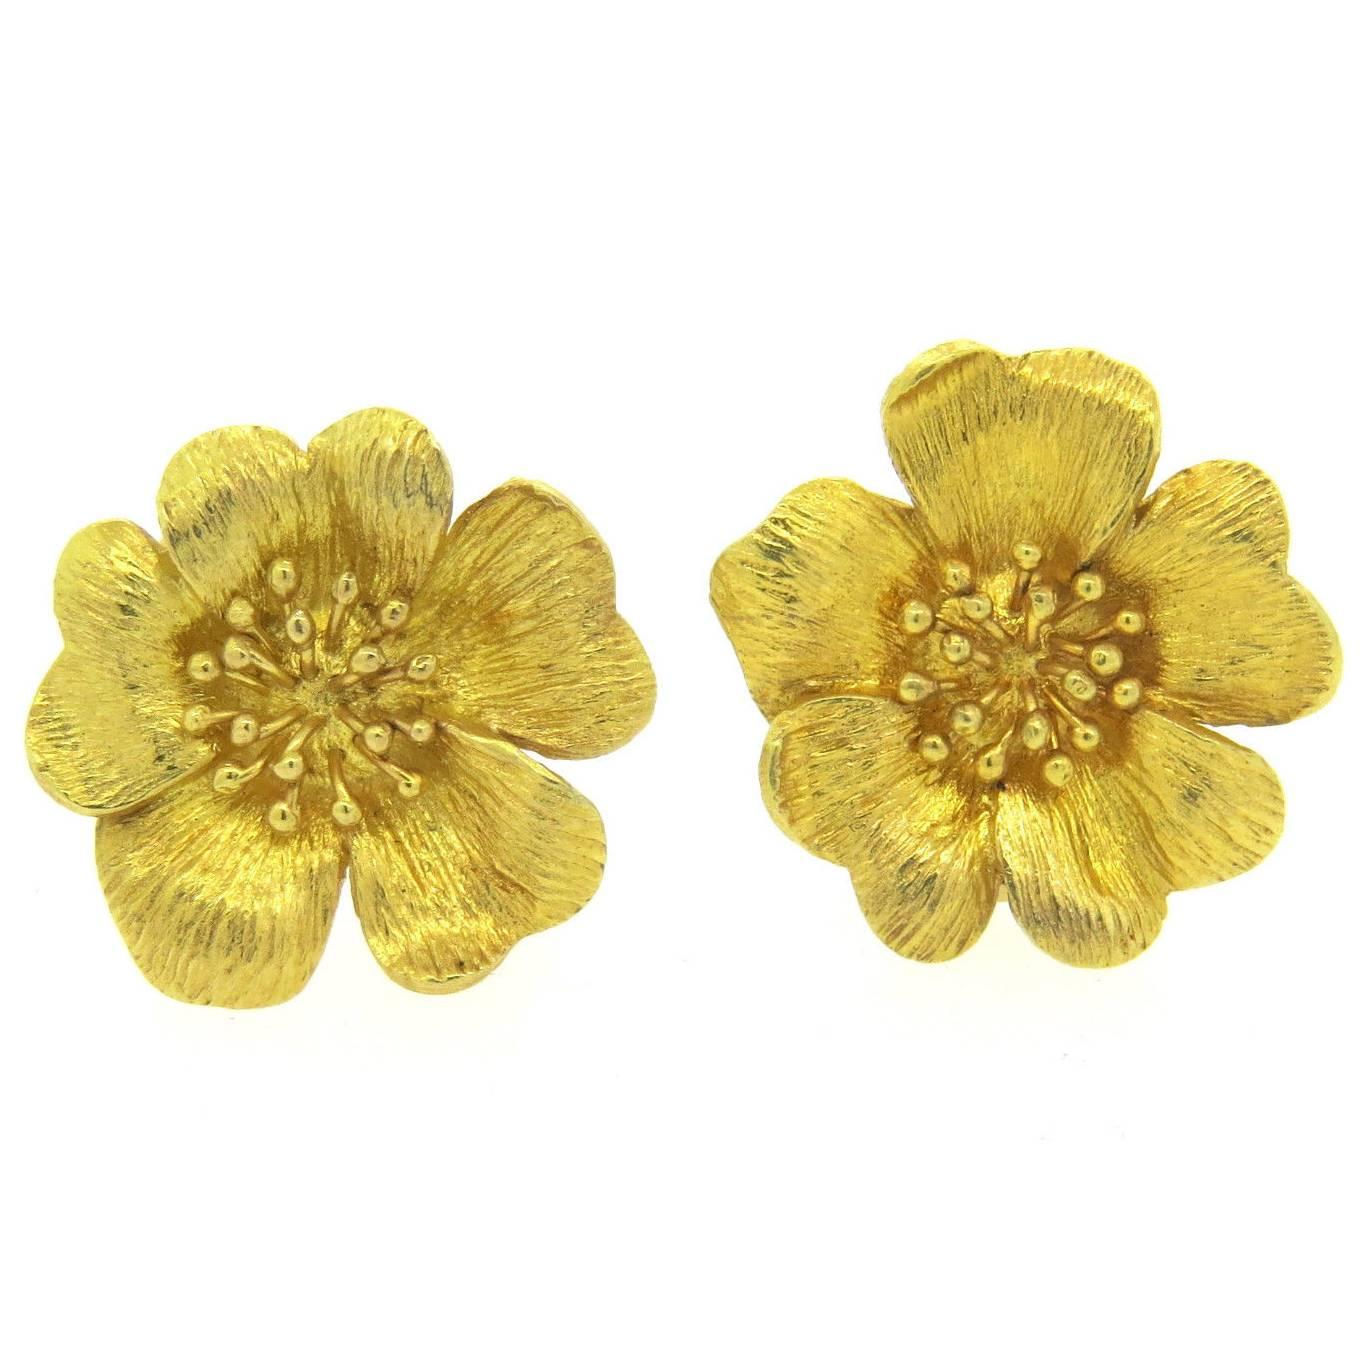 Ilias Lalaounis Gold Wild Rose Flower Earrings